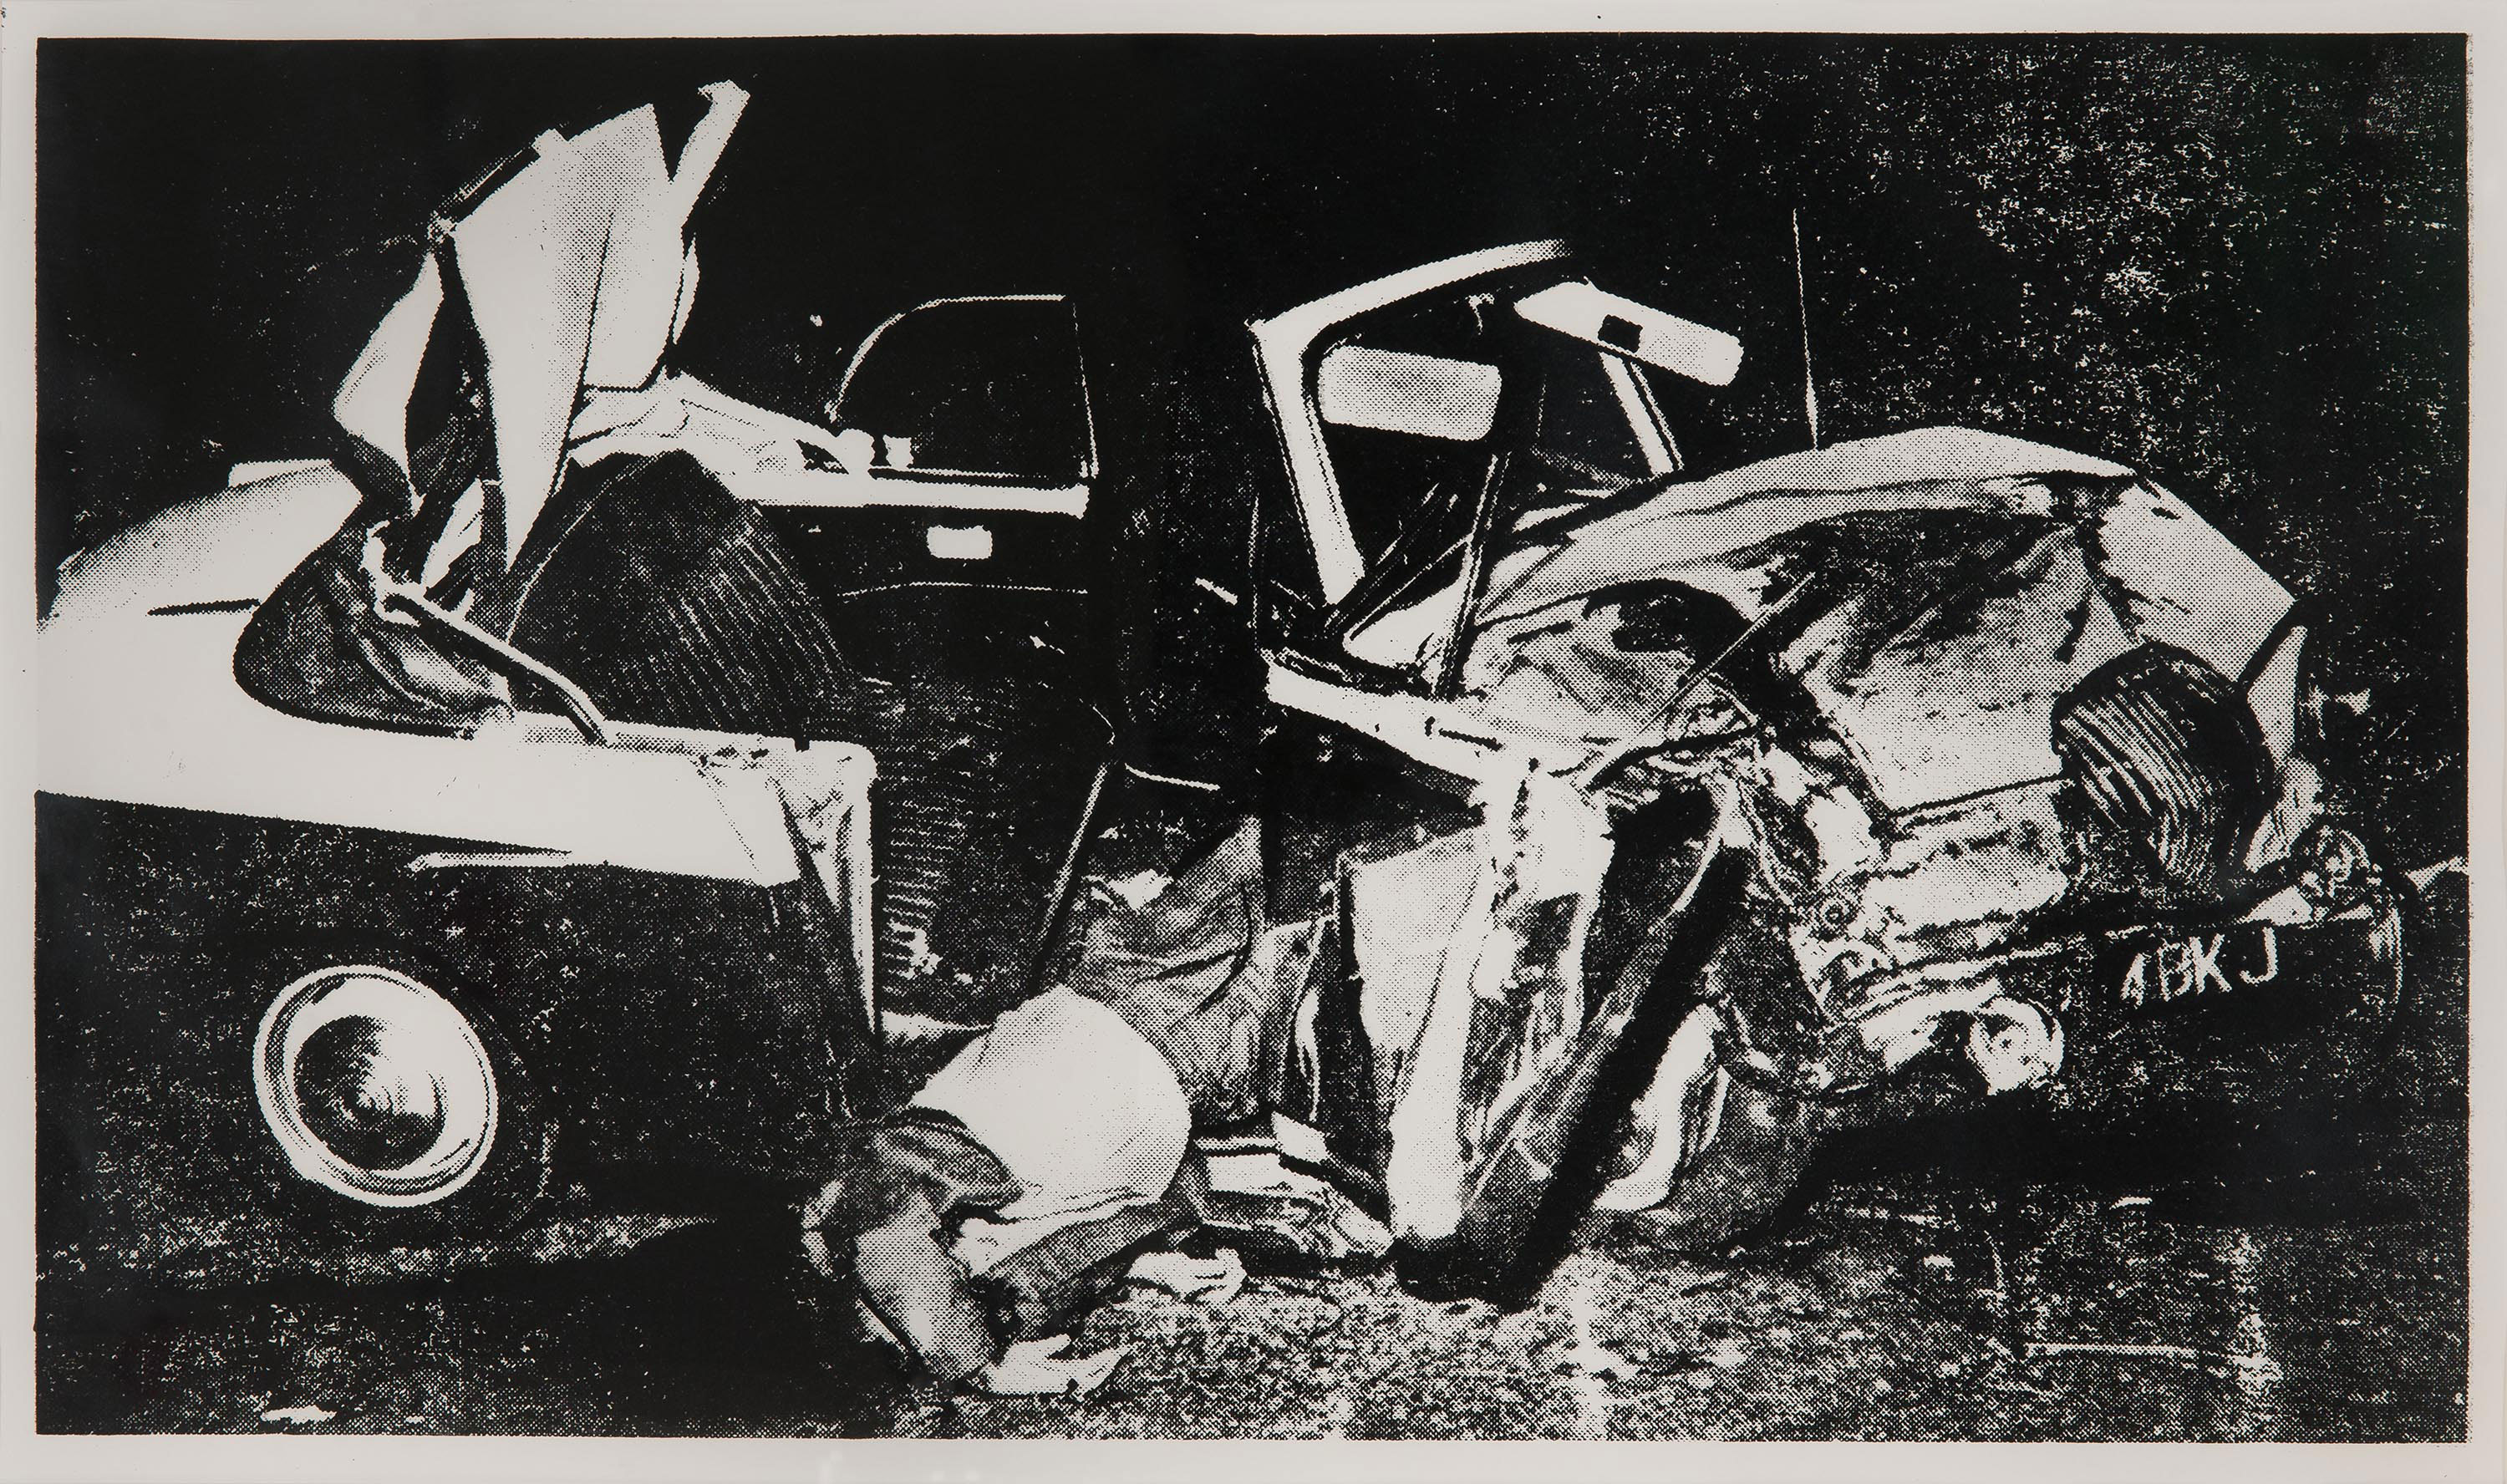 A black and white screenprint of a car crash.